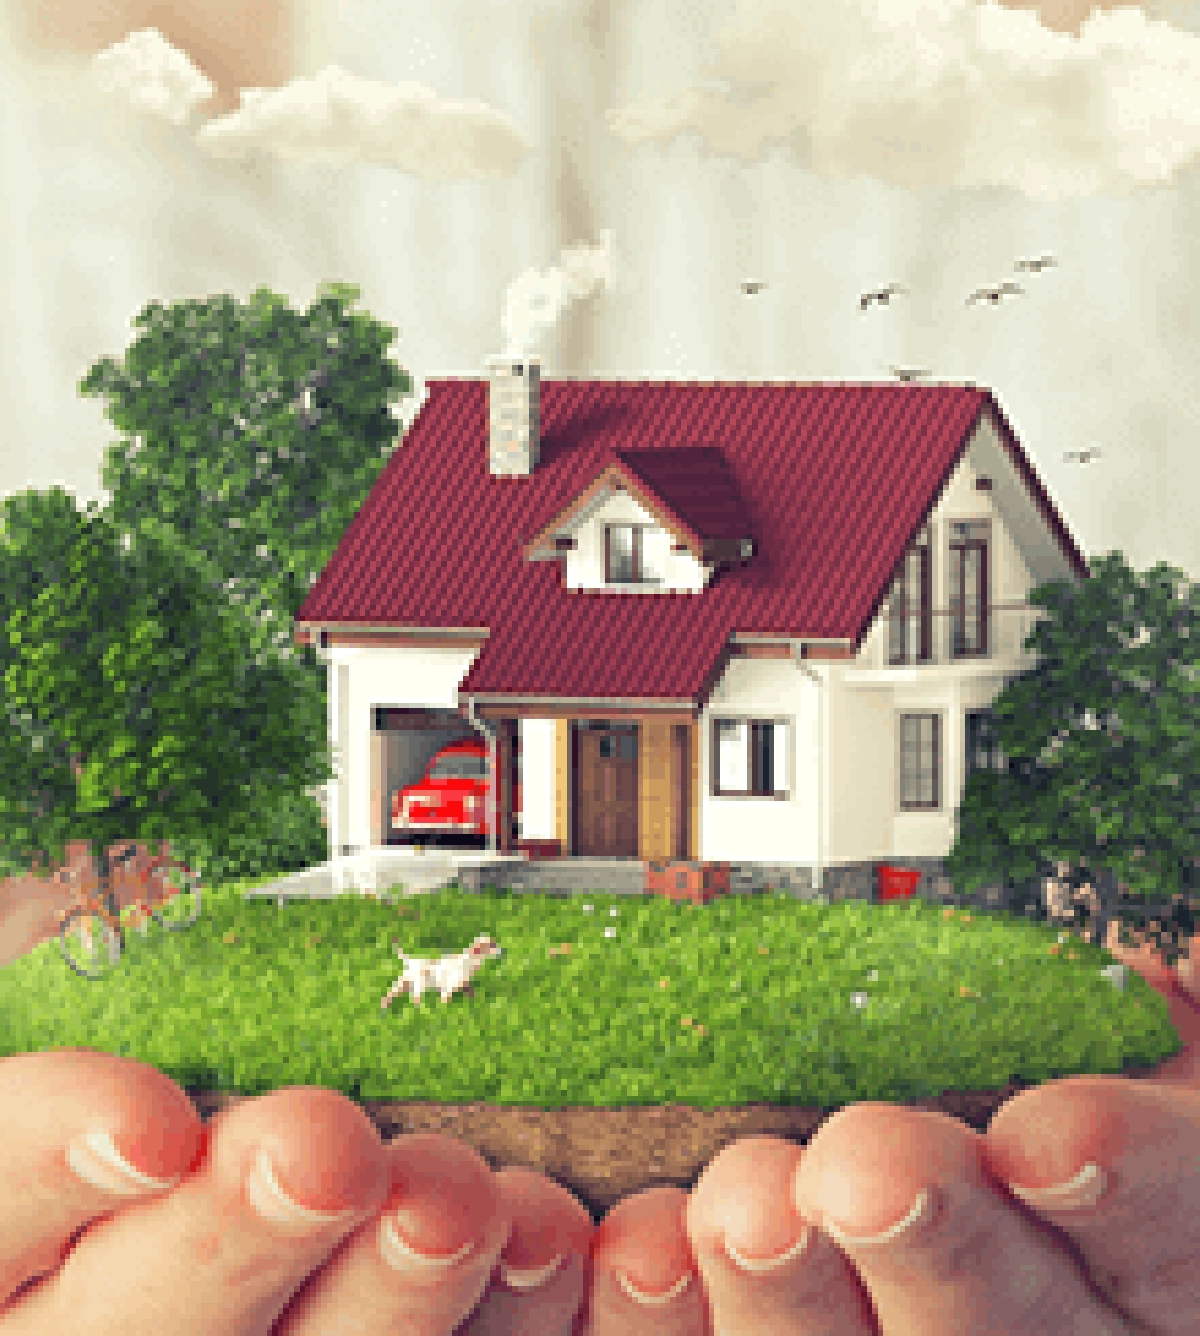 Article Image - As Rents Rise, Vanderbilt Mortgage Highlights Benefits of Homeownership